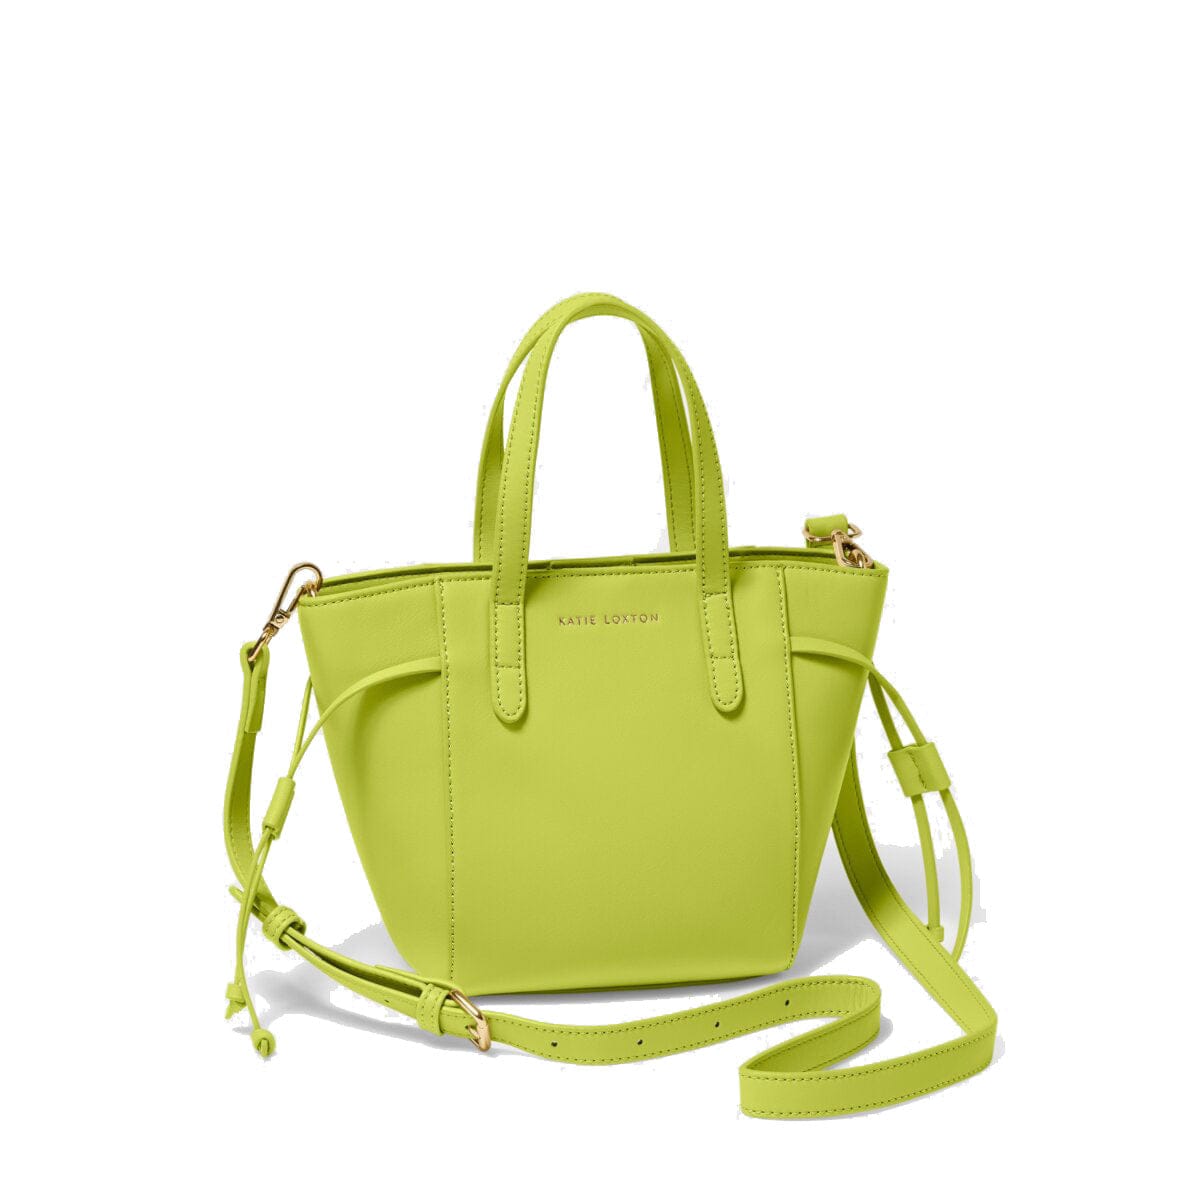 Katie Loxton Handbag Lime Green Katie Loxton Ashley Mini Handbag - Off White / Light Taupe / Lime Green / Cloud Pink